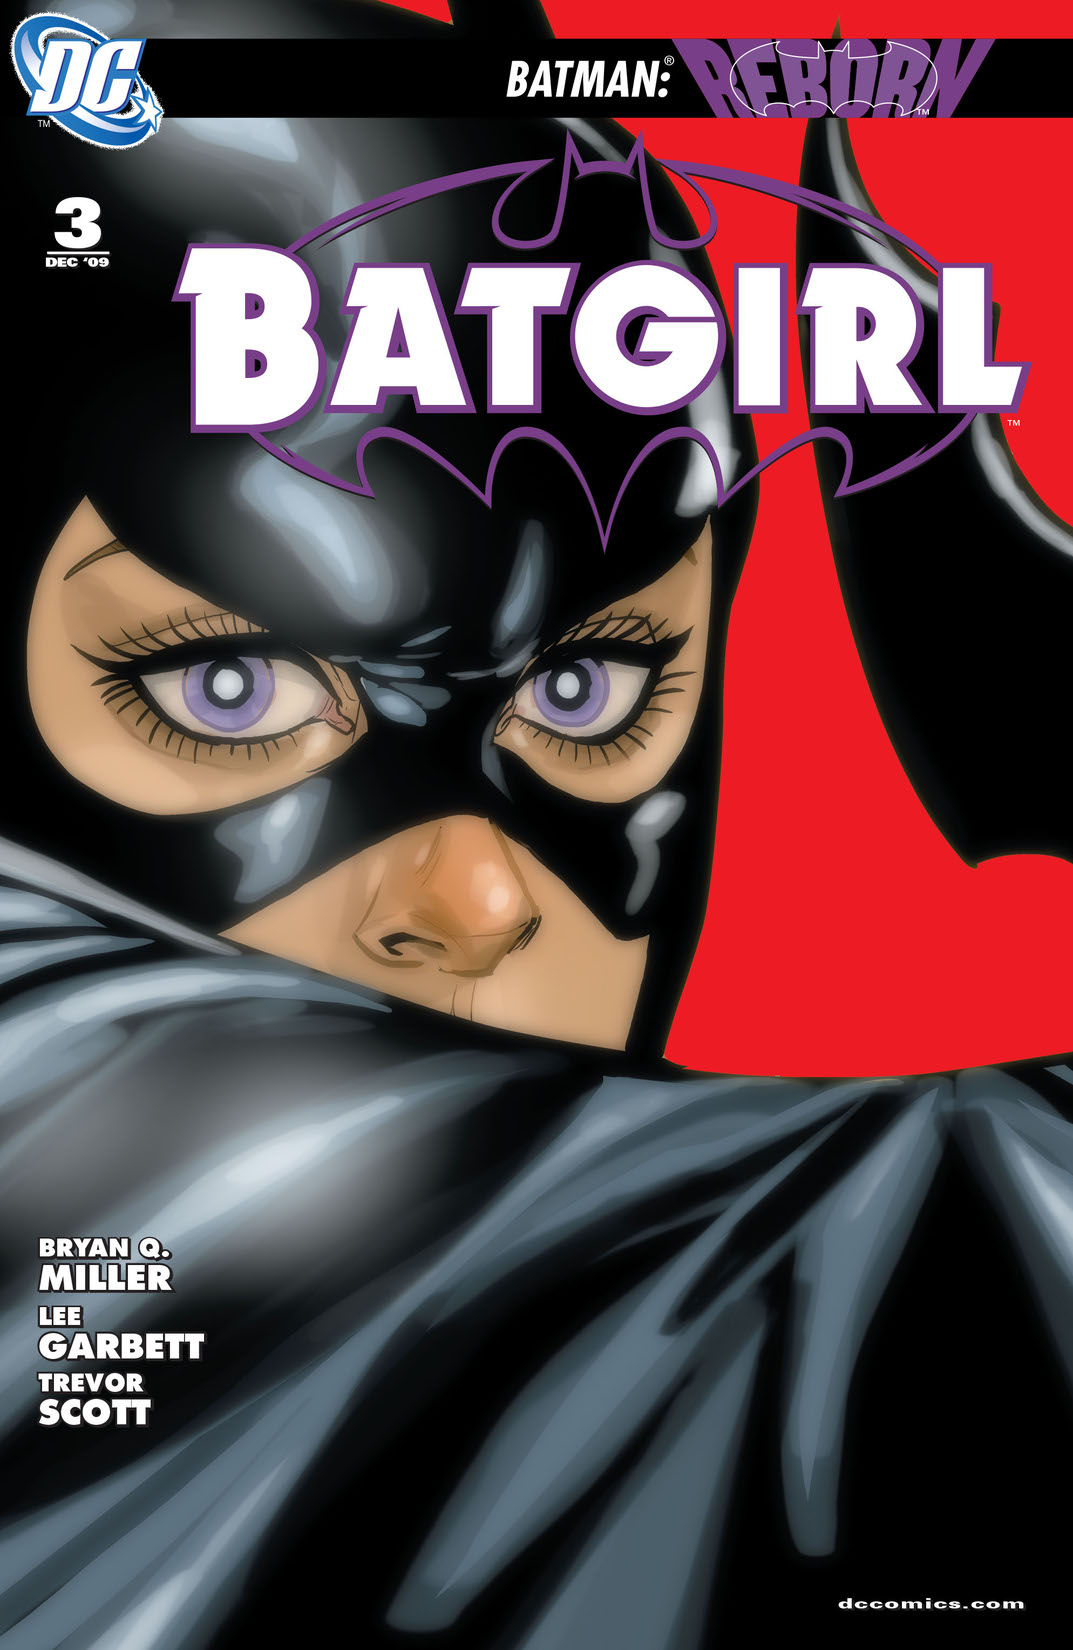 Batgirl (2009-) #3 preview images